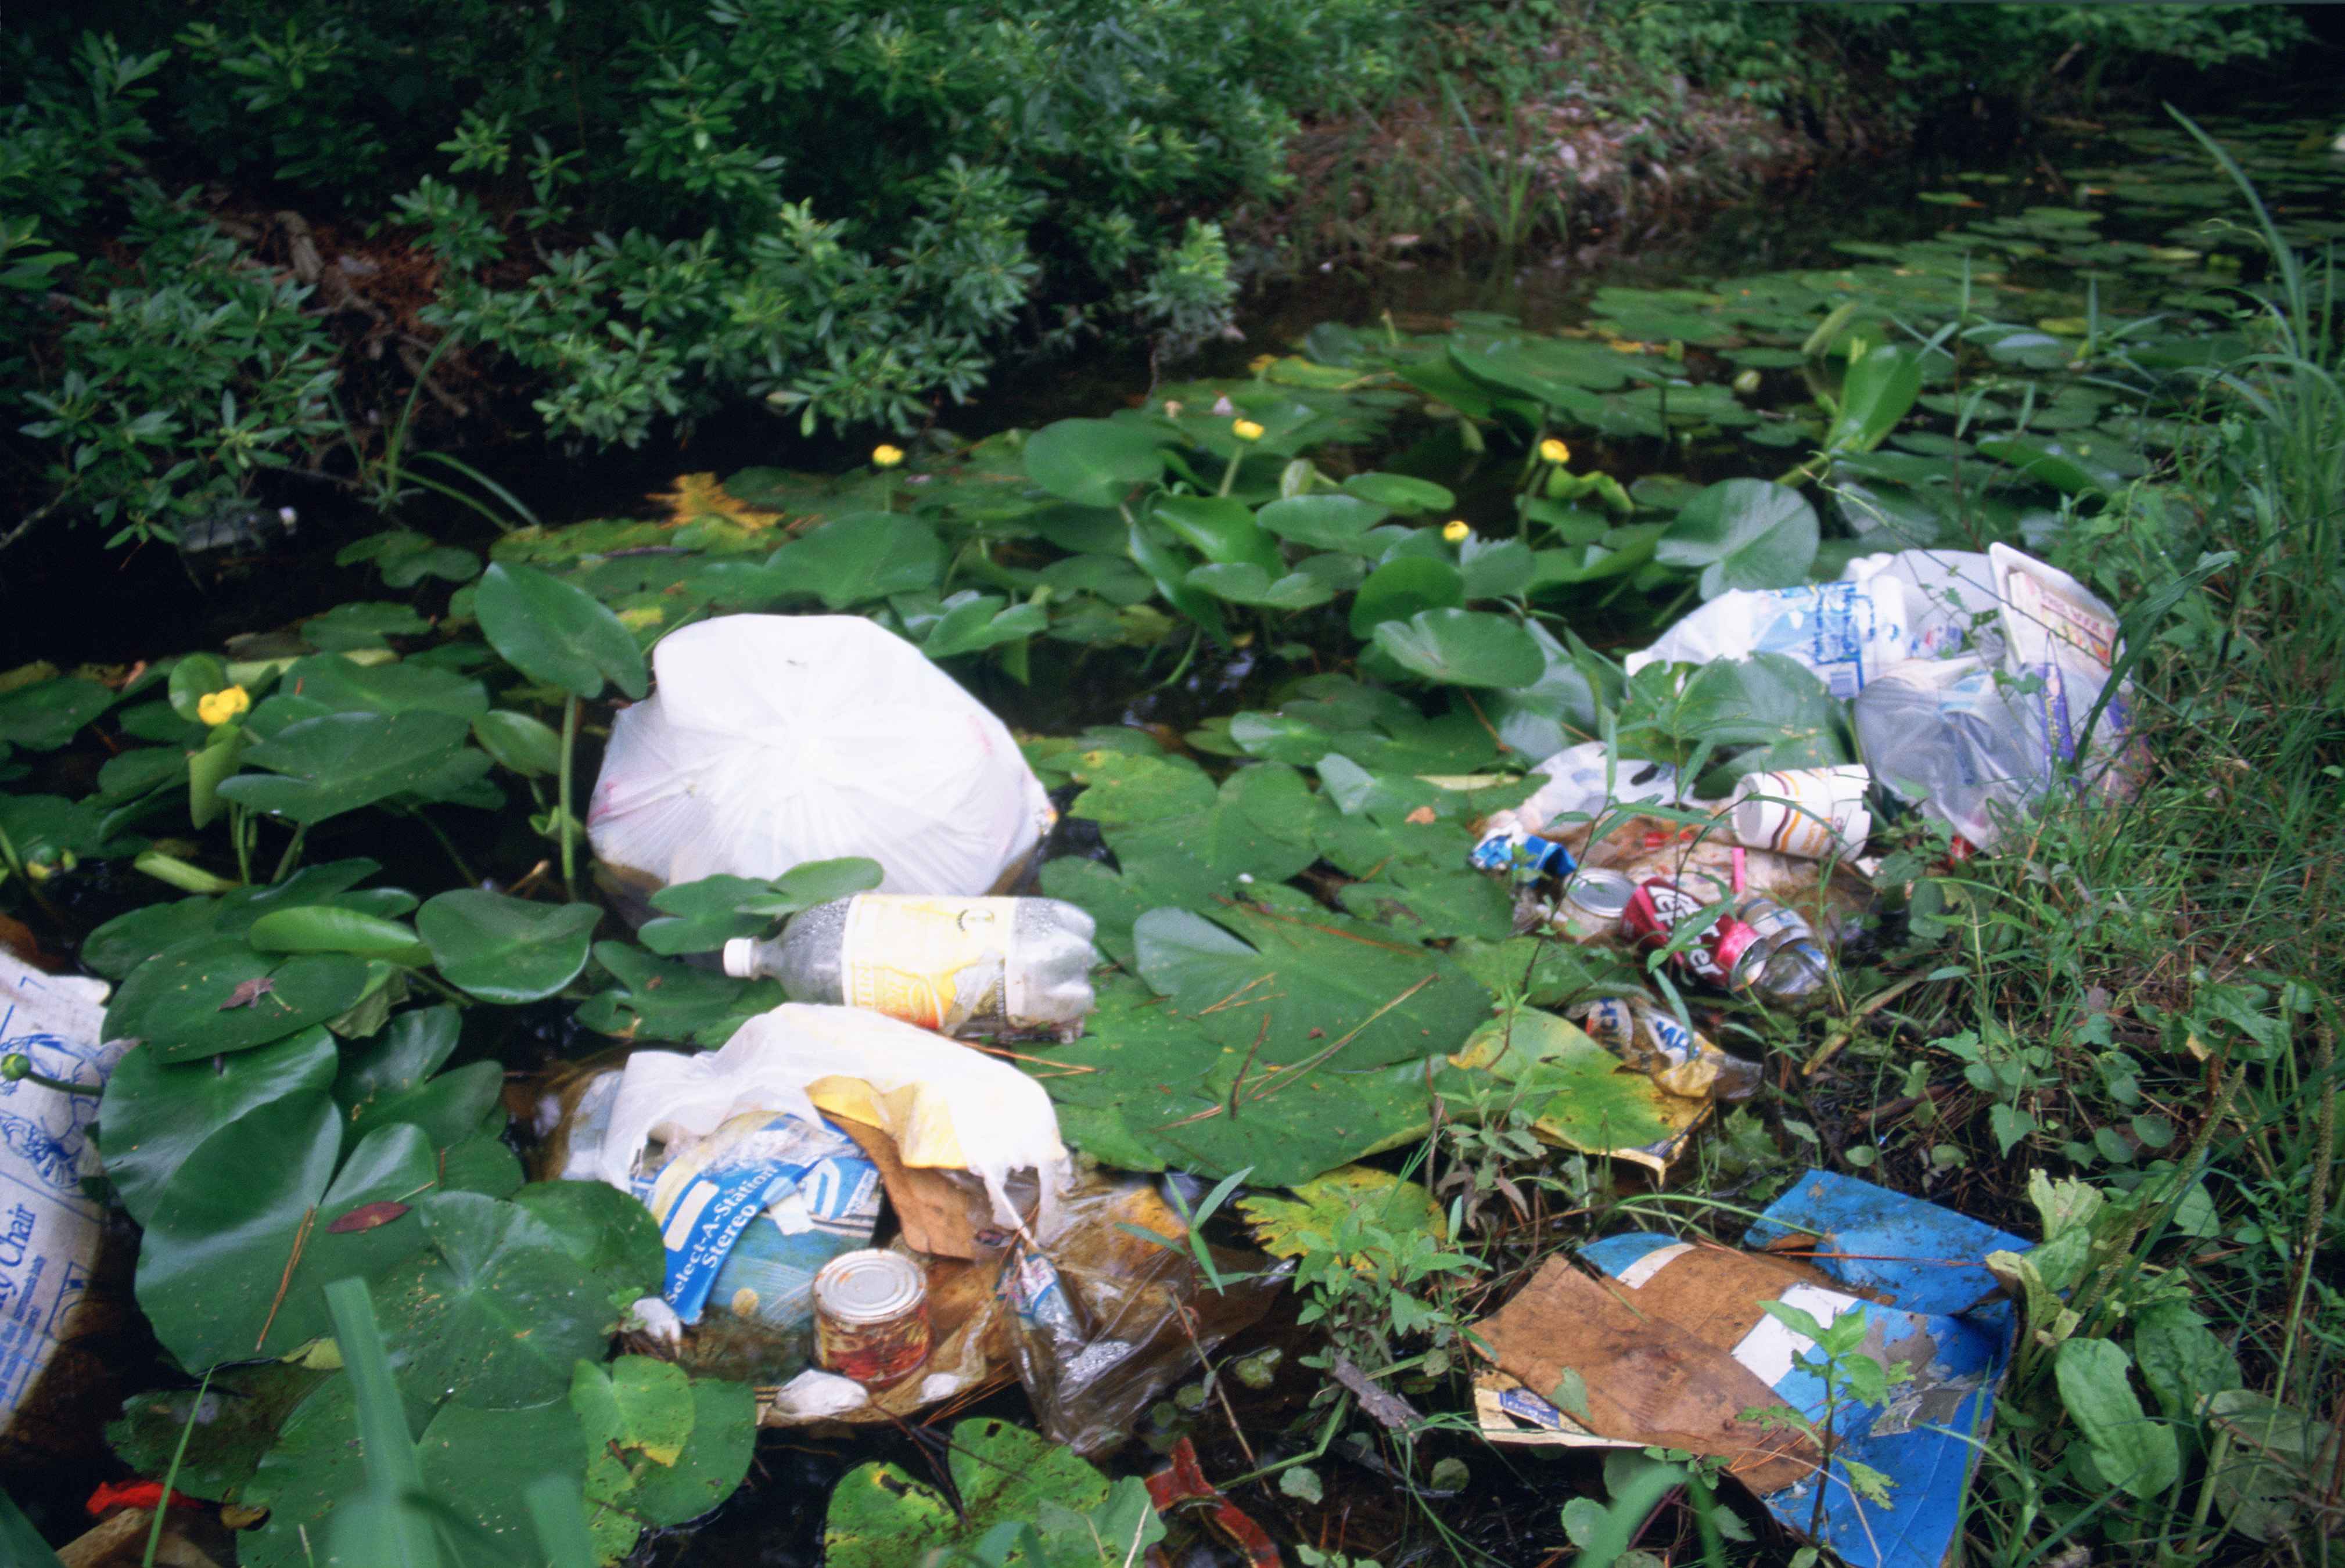 Litter and Plastic Bags in U.S. Wetland